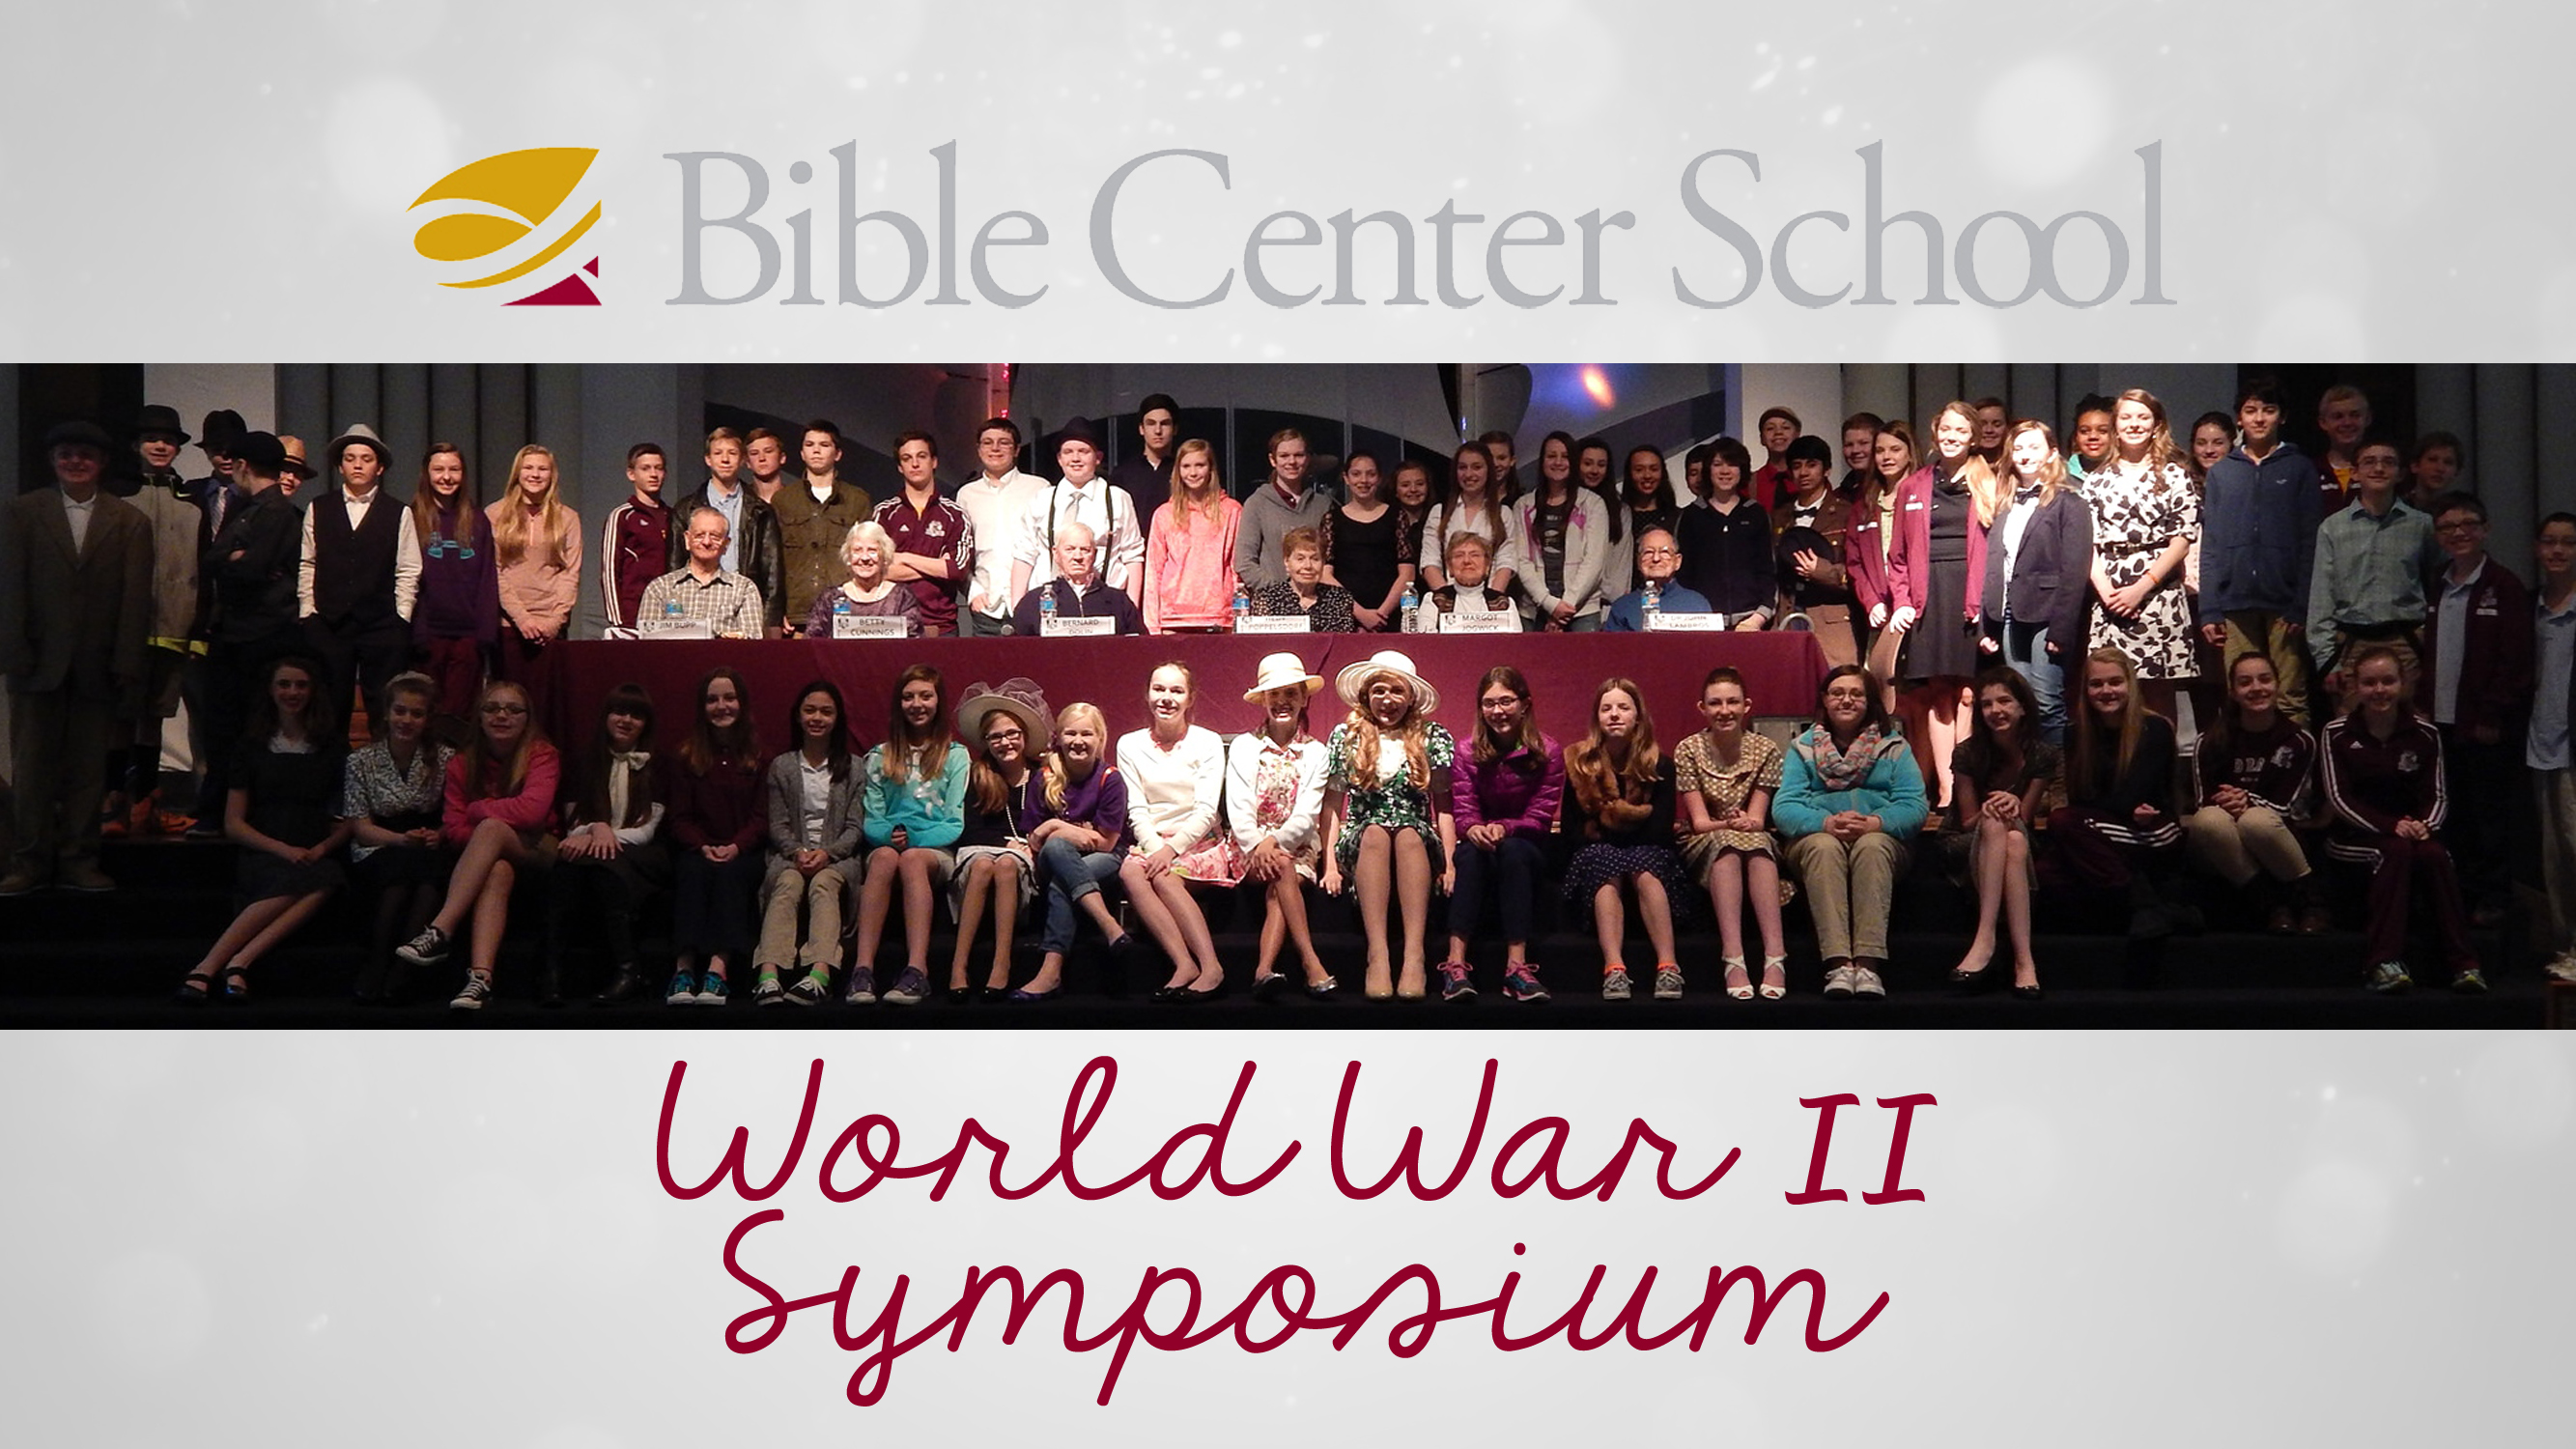 World War II Symposium